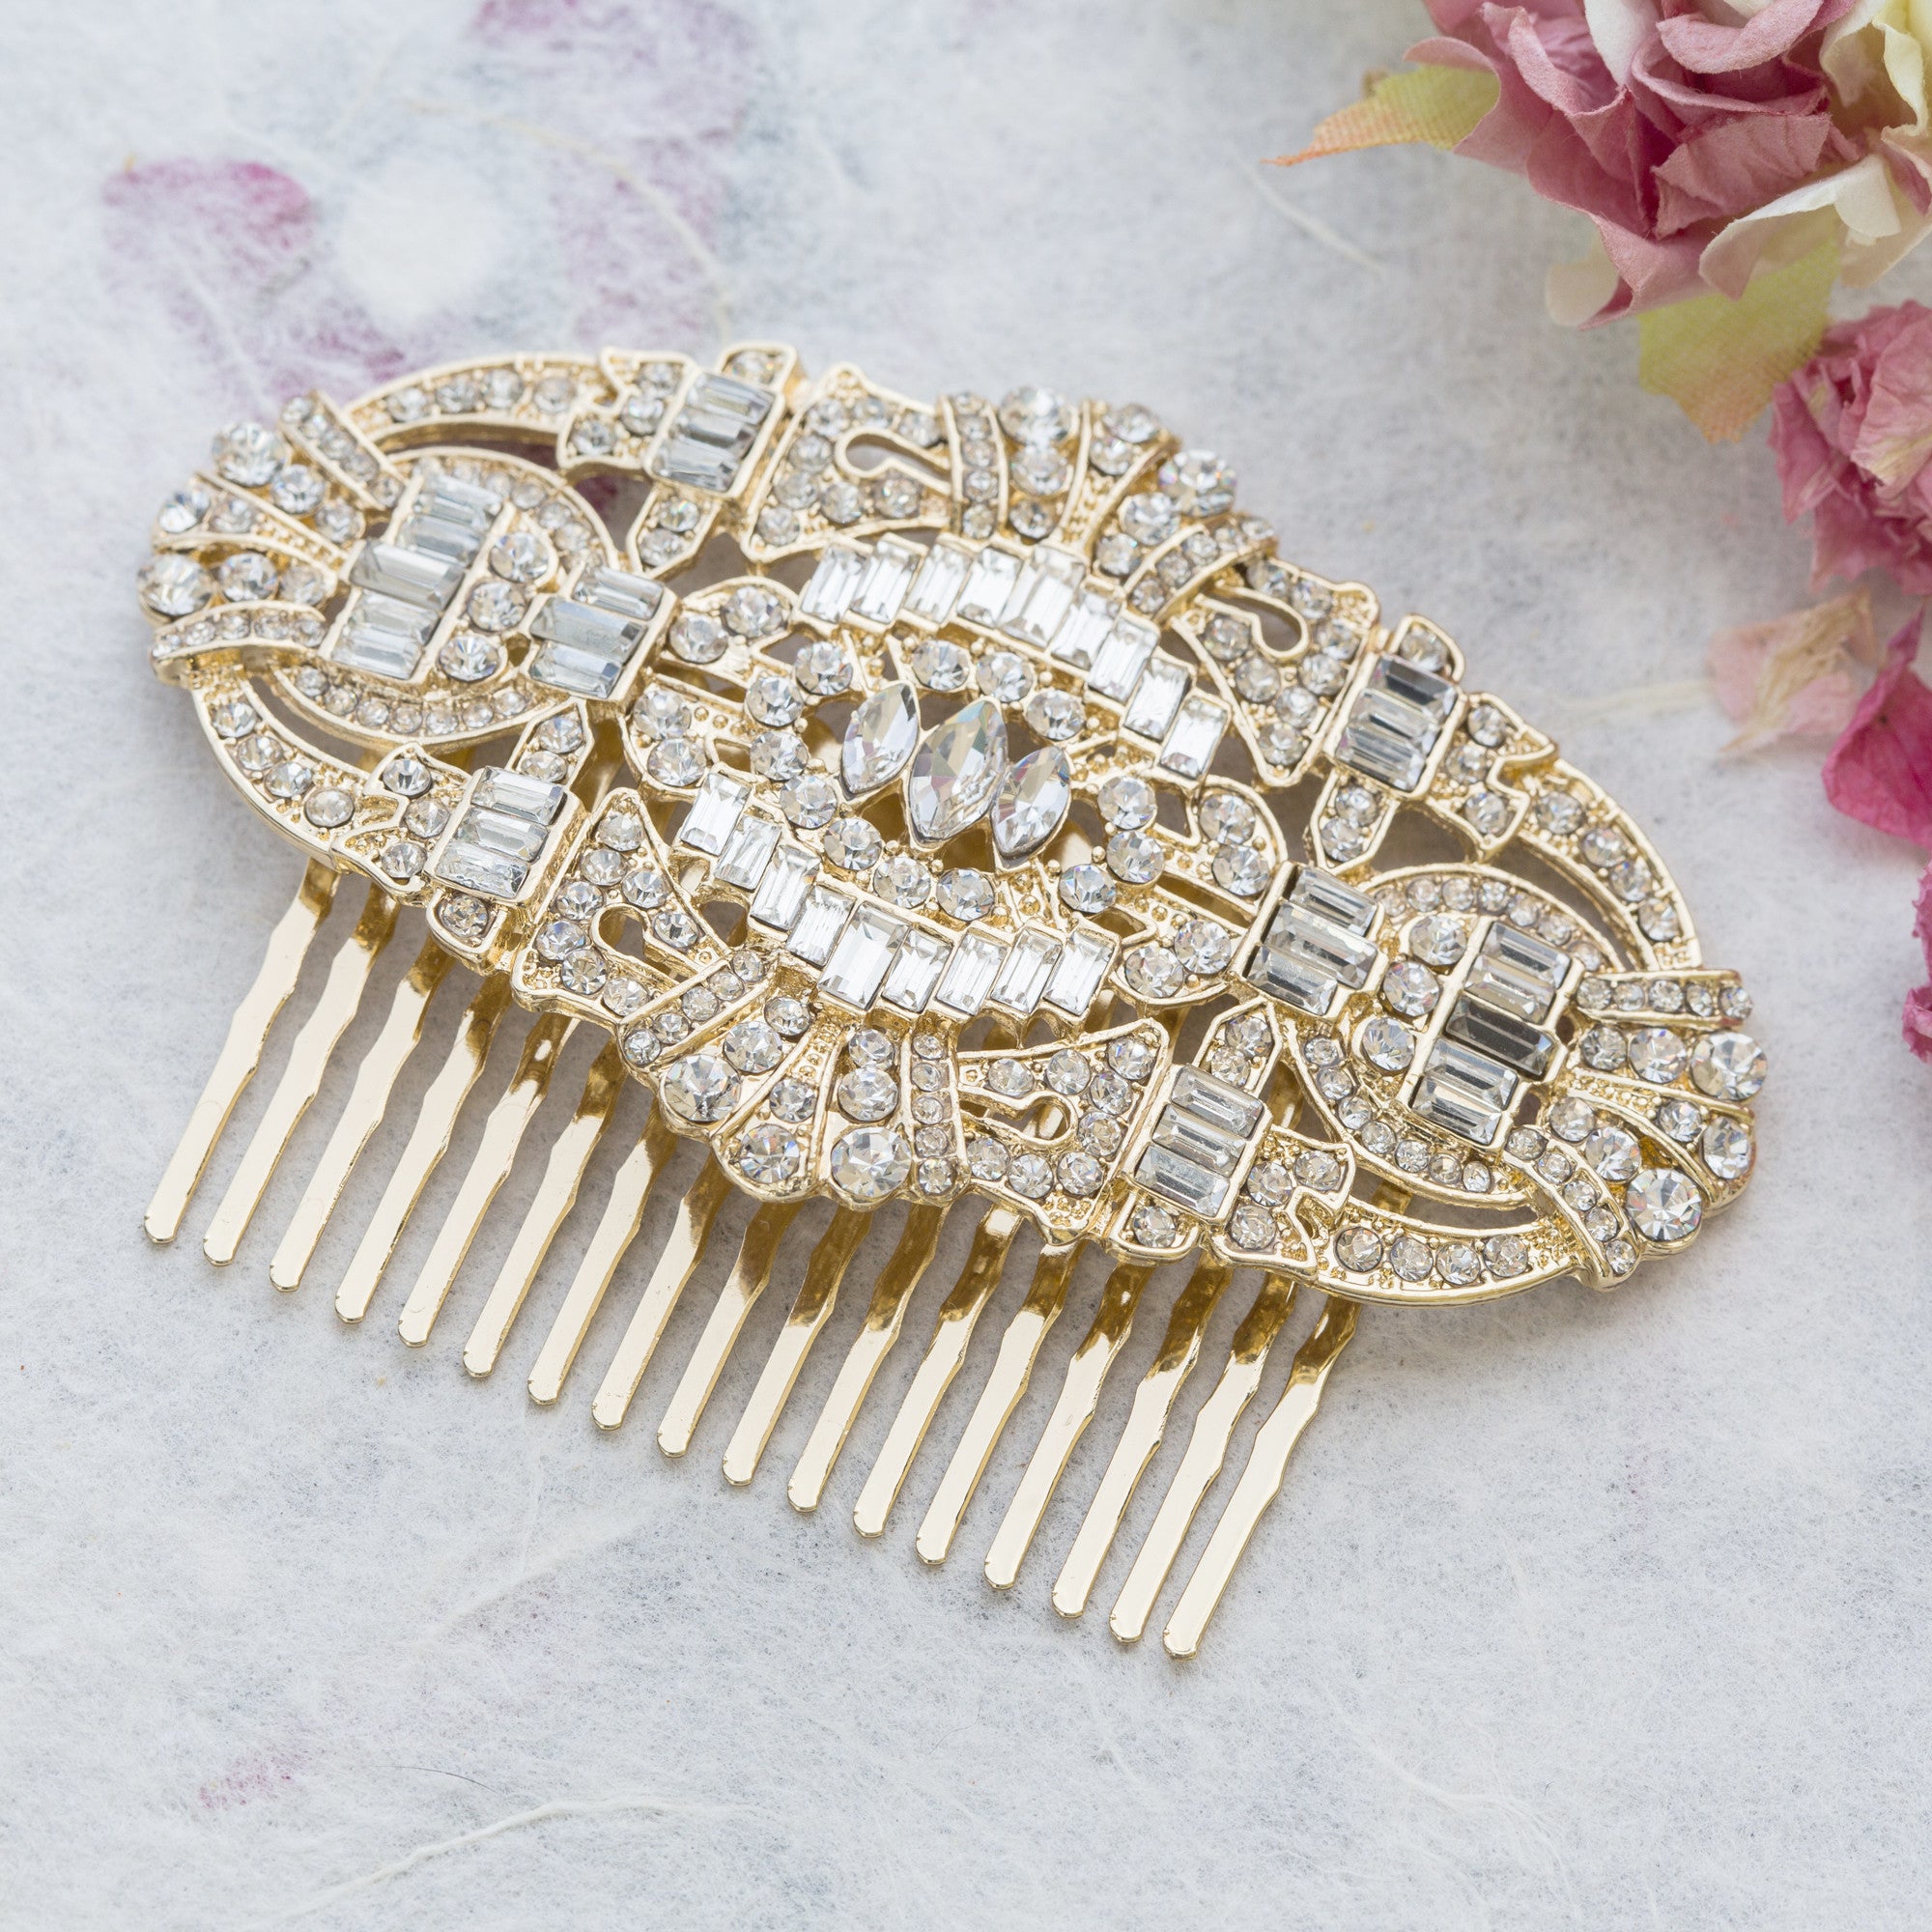 Aubrey crystal rose gold hair comb